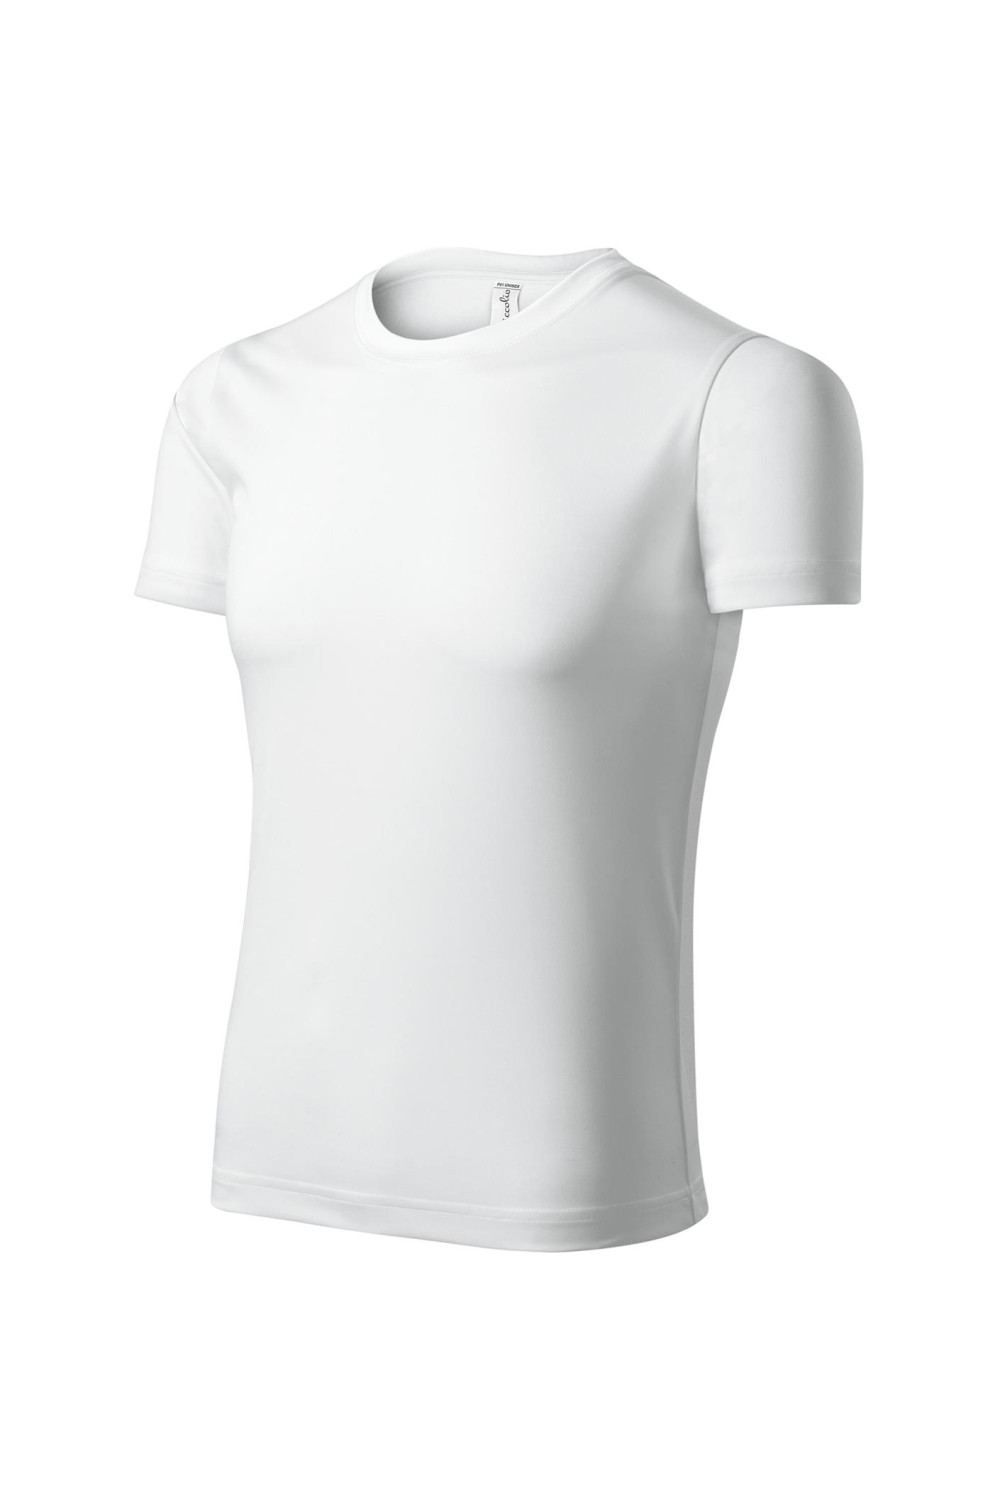 PIXEL P81 MALFINI ADLER Koszulka t-shirt unisex biały